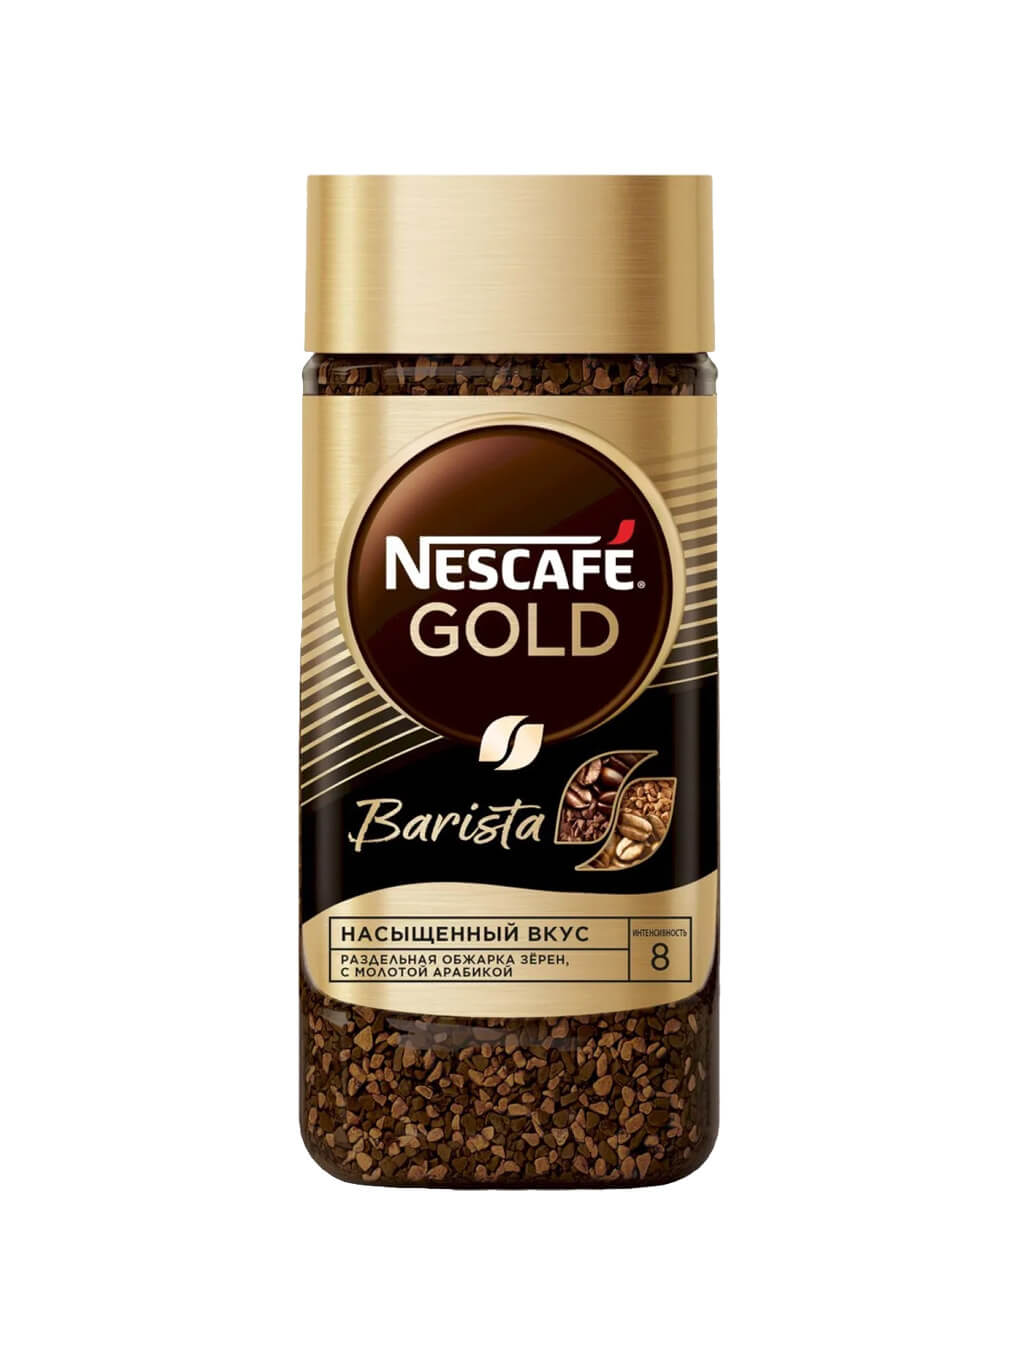 Nescafe gold barista style. Кофе Нескафе Голд бариста. Nescafe Gold Barista со вкусом. Кофе Nescafe Gold Barista раств.,85г (набор с кружкой). Nescafe Gold Barista Style 85.